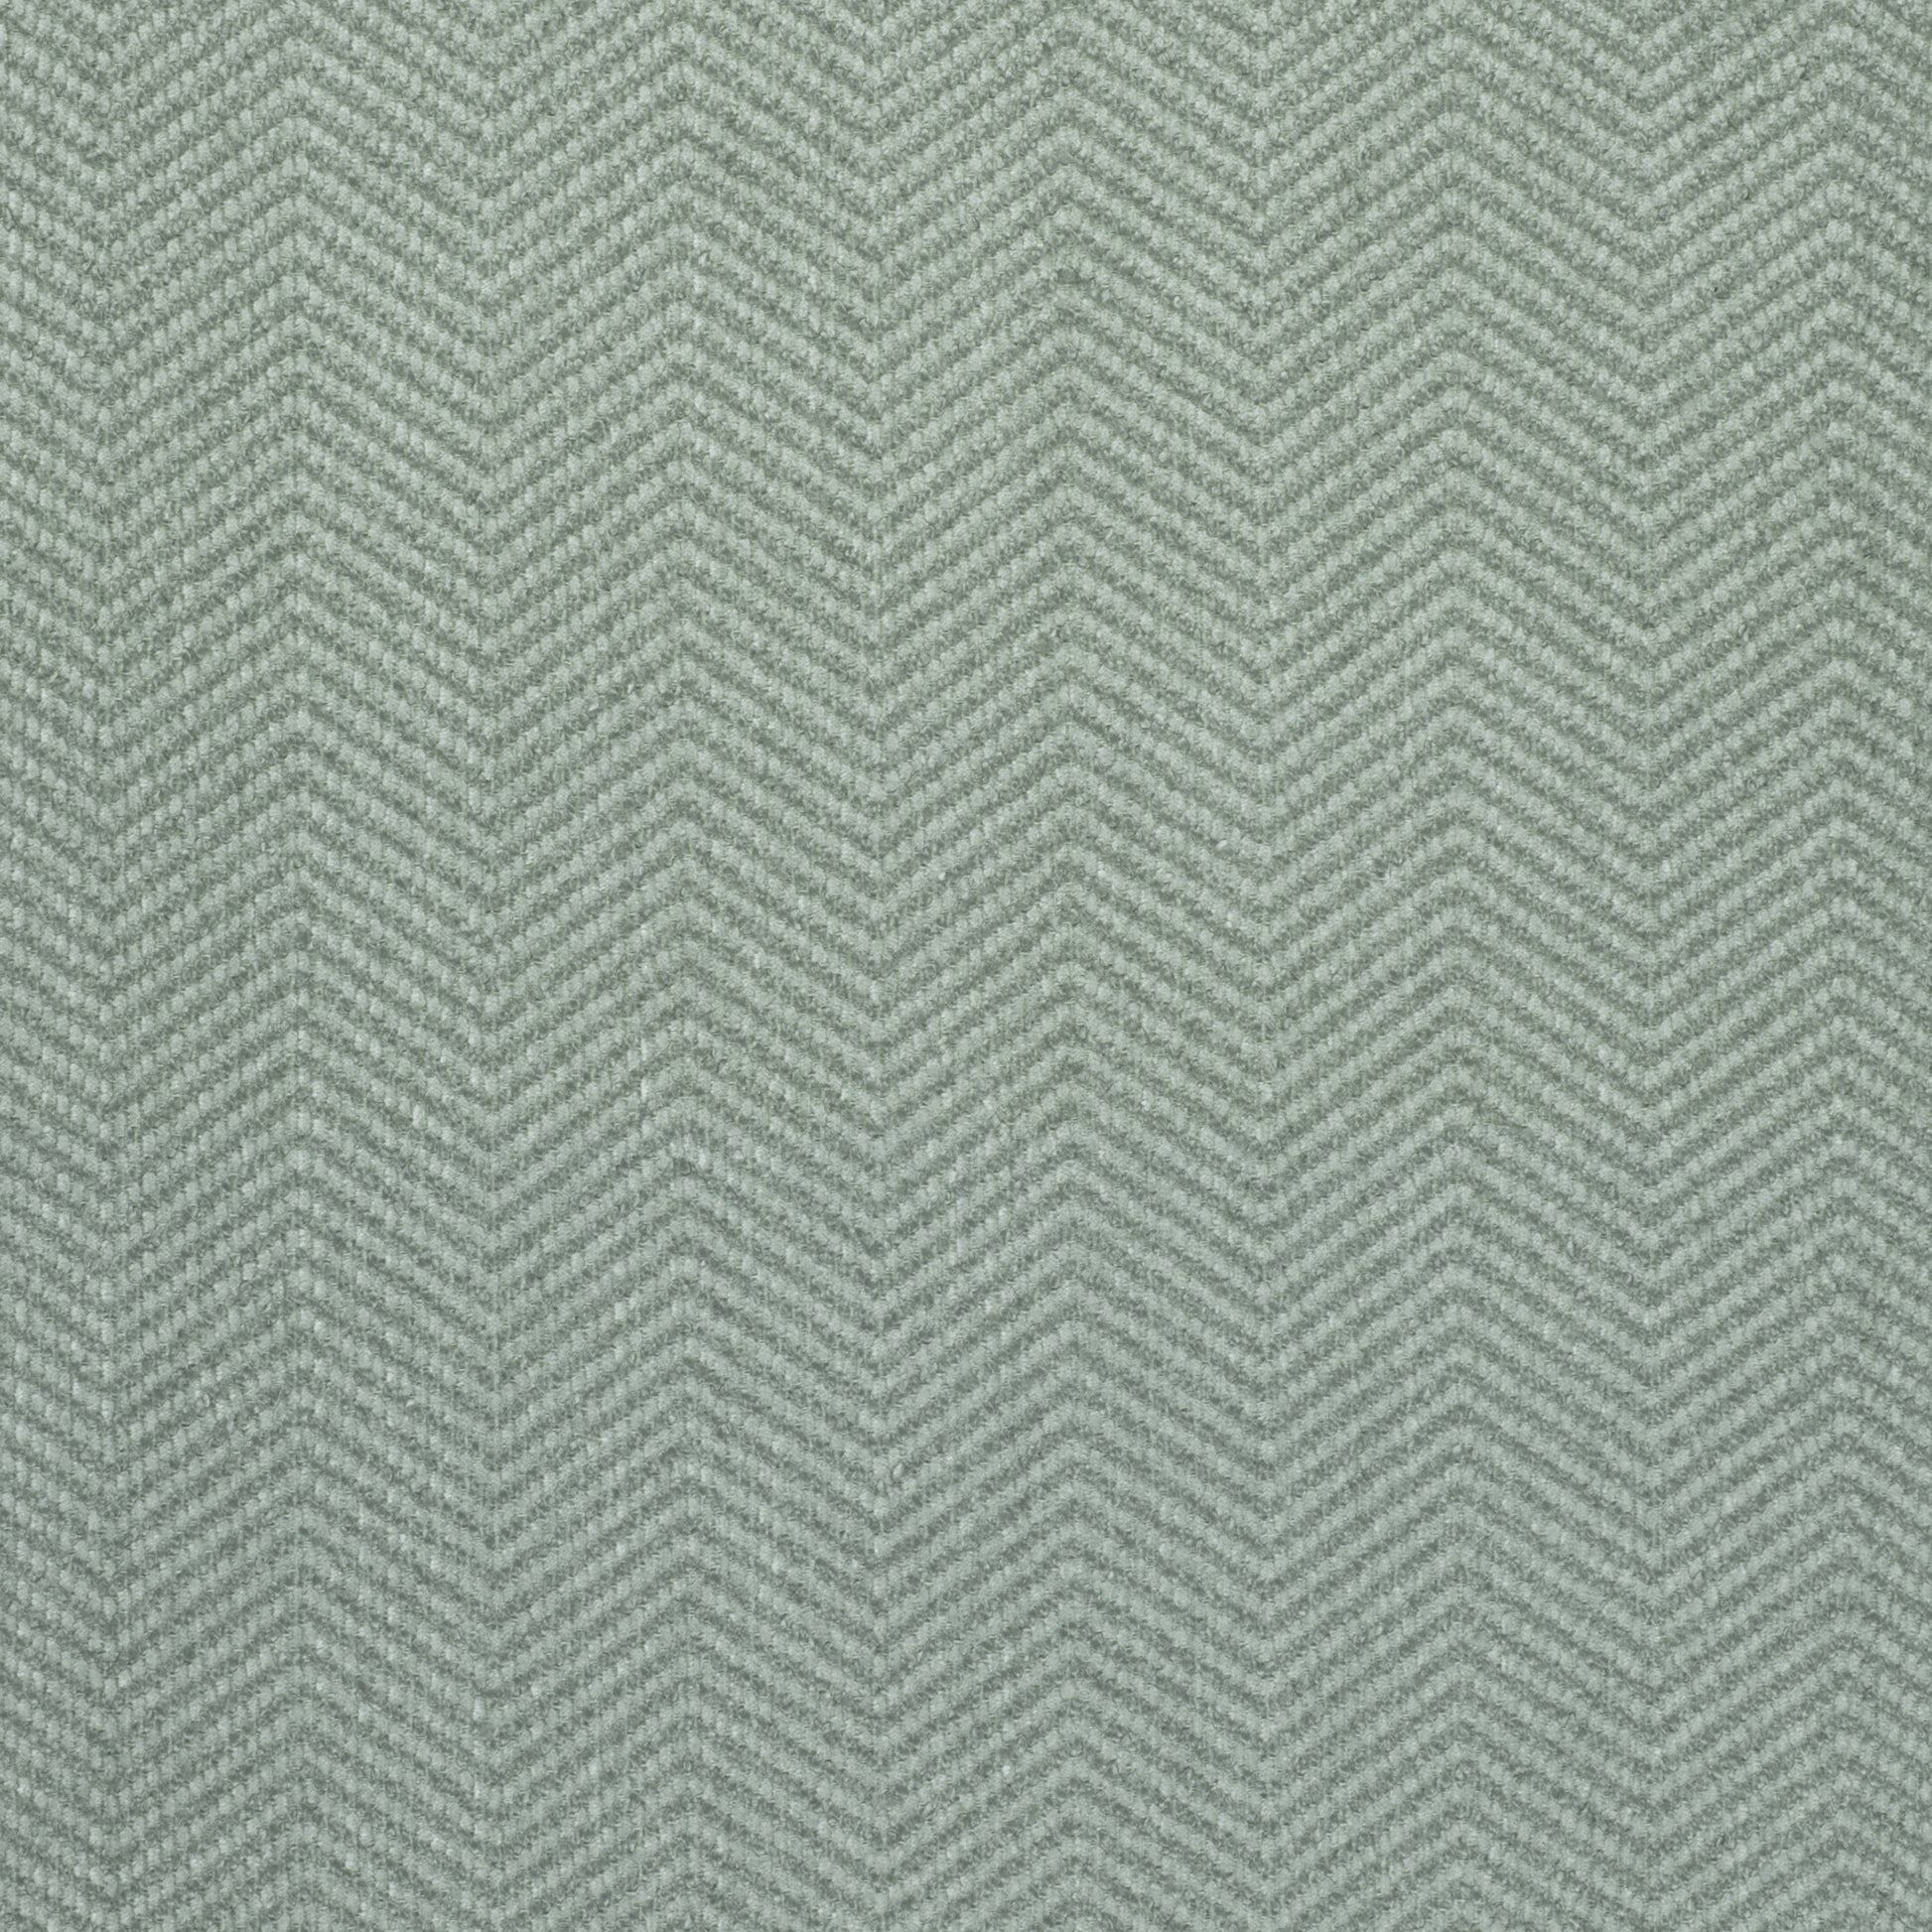 Purchase Thibaut Fabric SKU# W80622 pattern name Dalton Herringbone color Fog